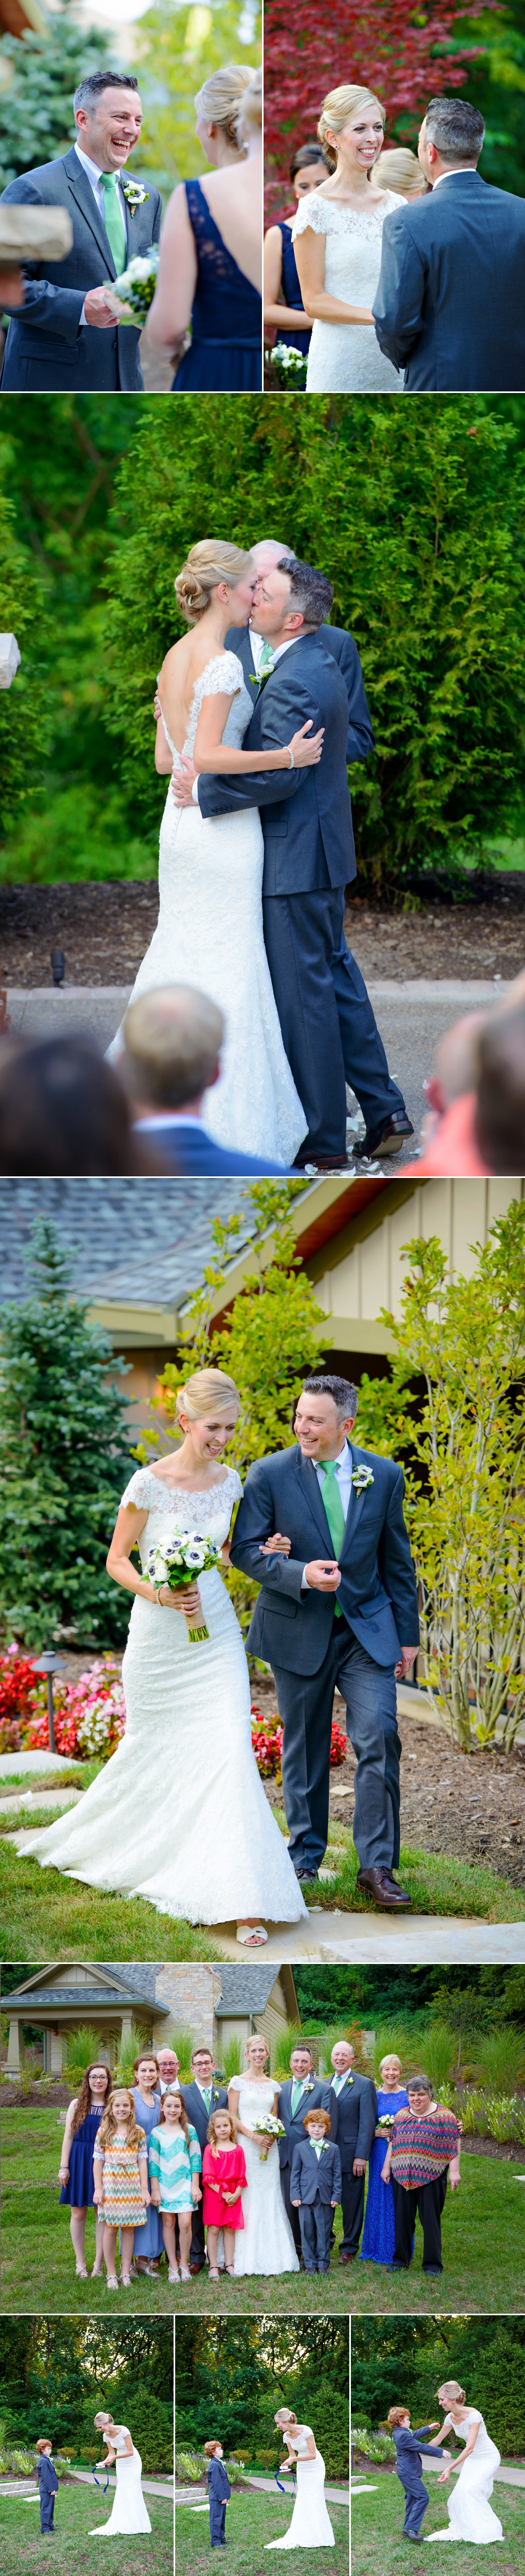 St. Louis Engagement & Wedding Photographer; Illumen Photography; www.illumenphotography.com